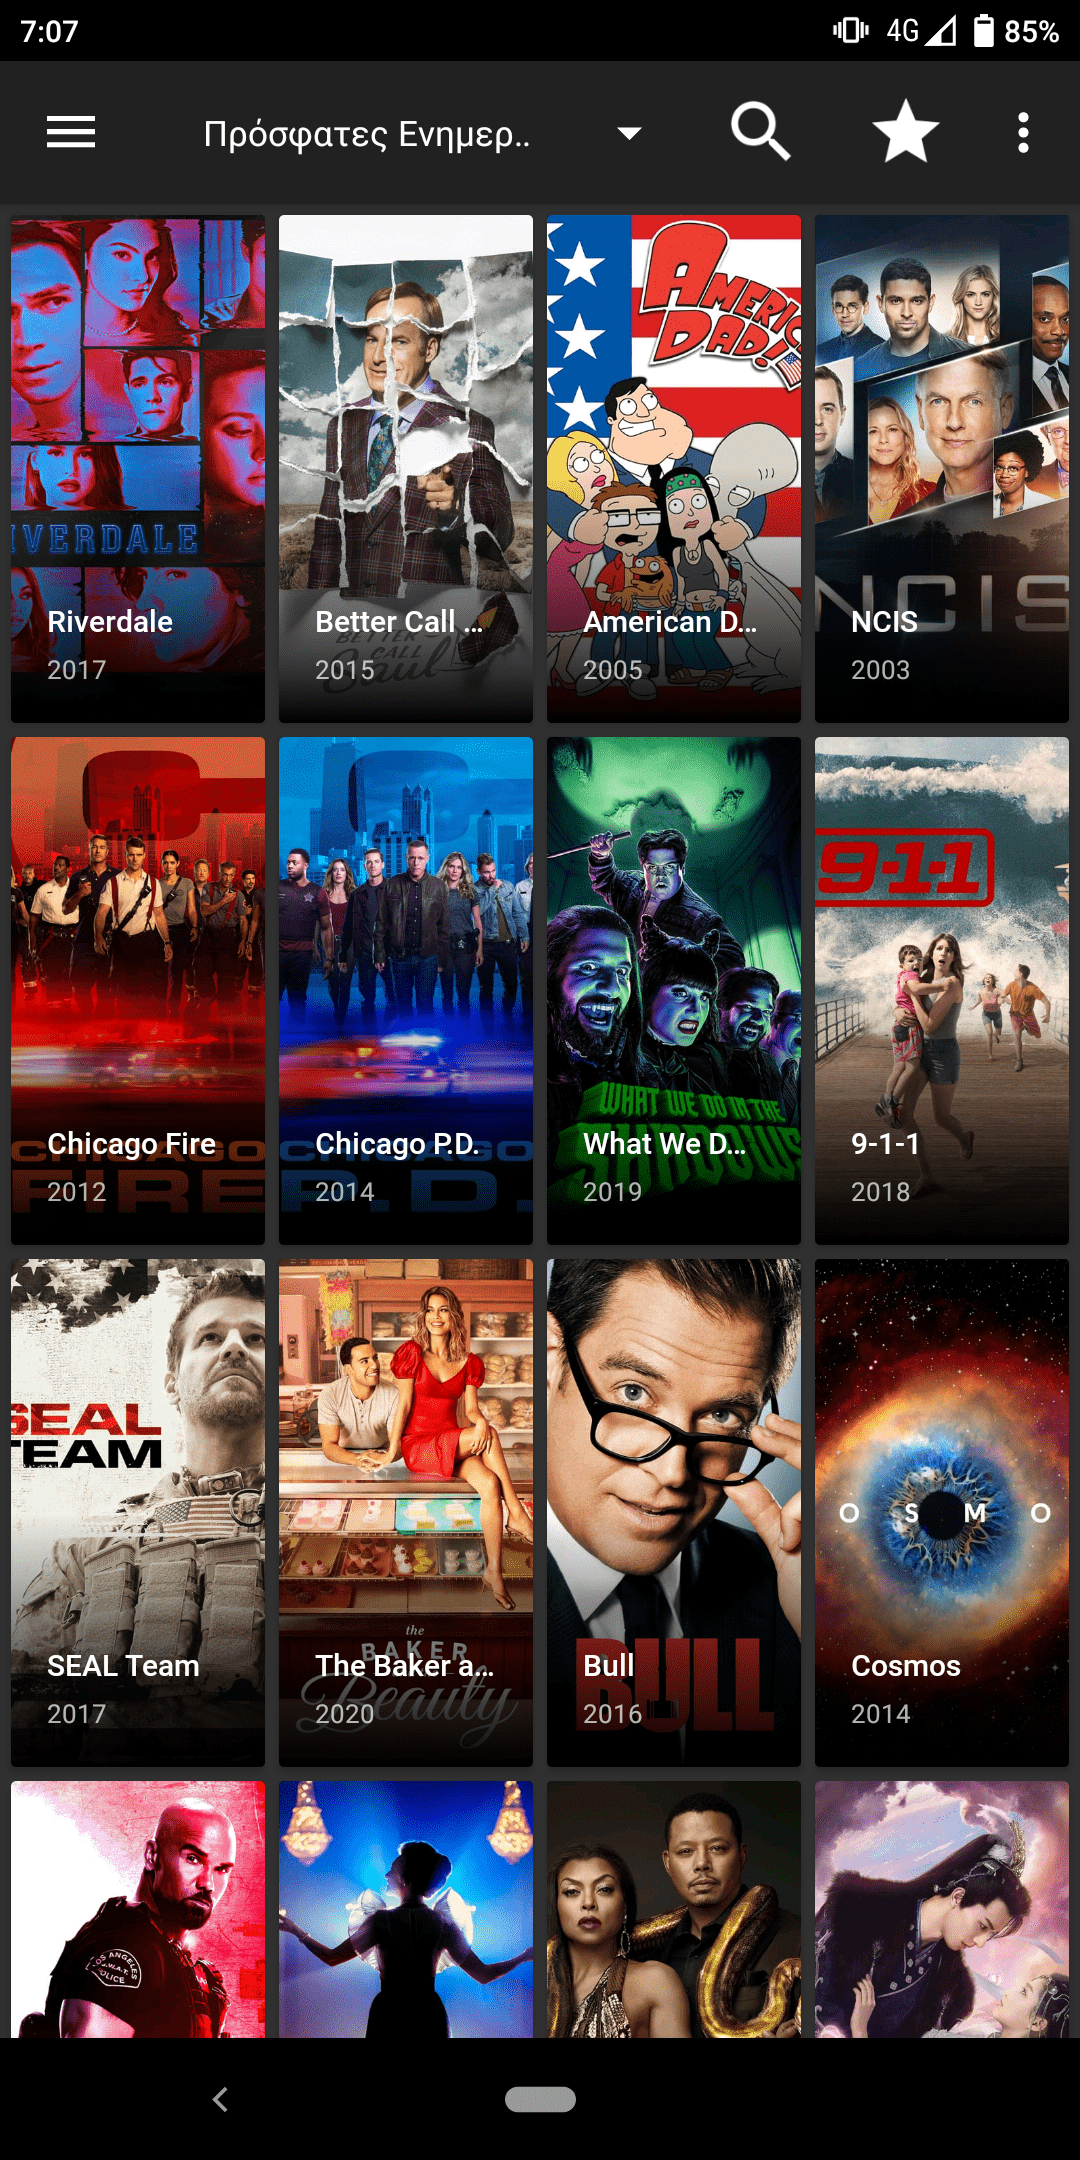 CyberFlix TV - Δωρεάν εφαρμογή με ταινίες και σειρές στο Android